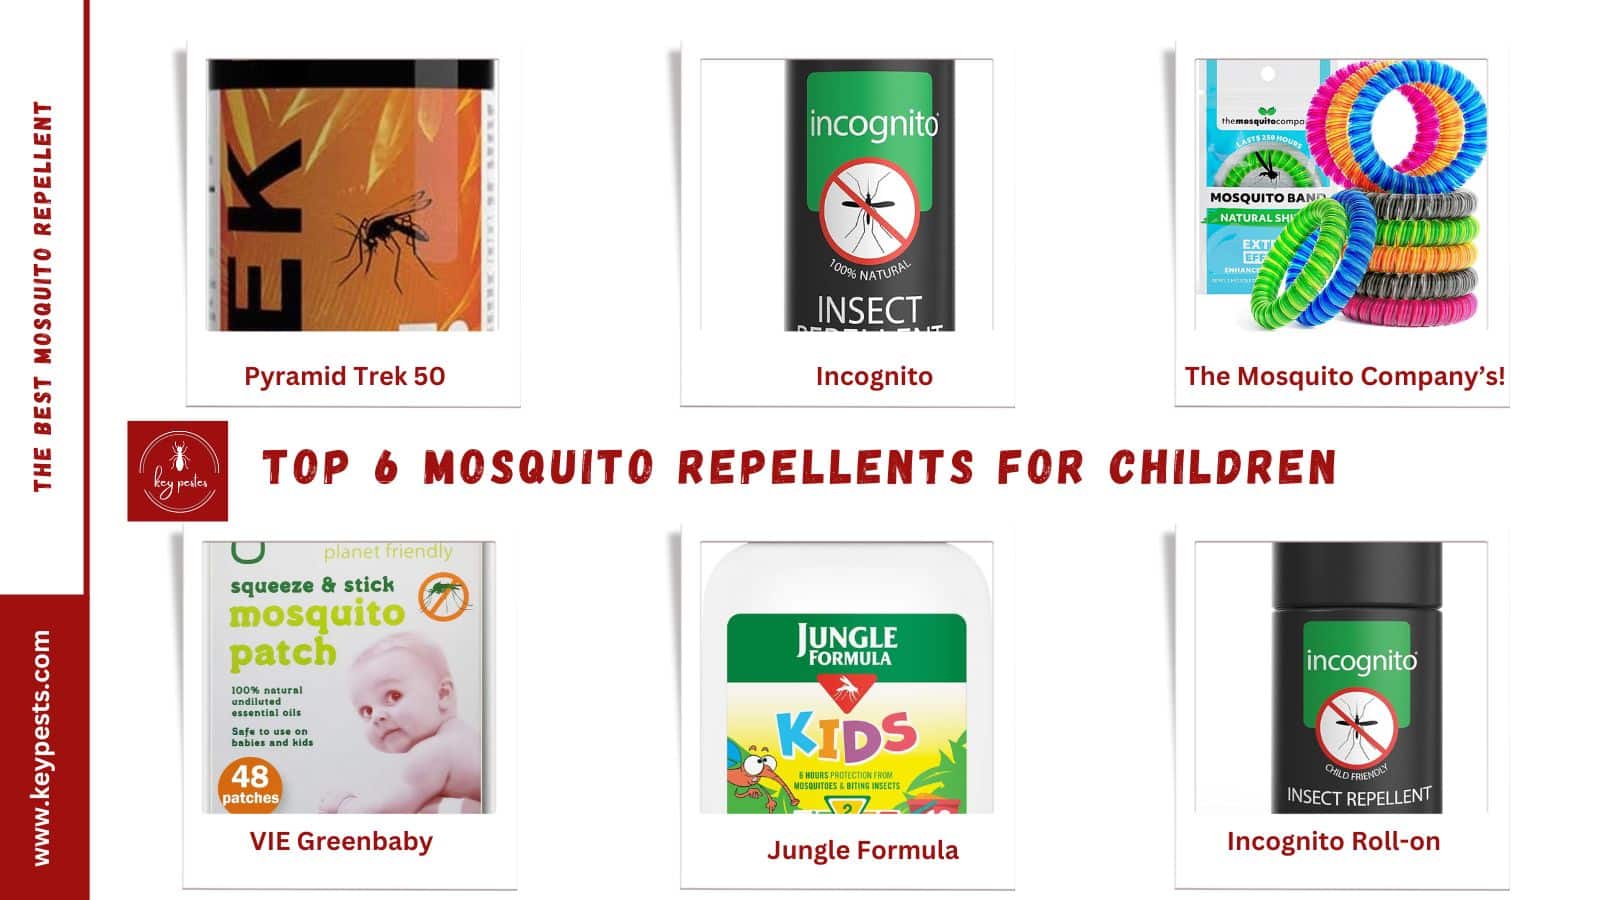 The best mosquito repellent